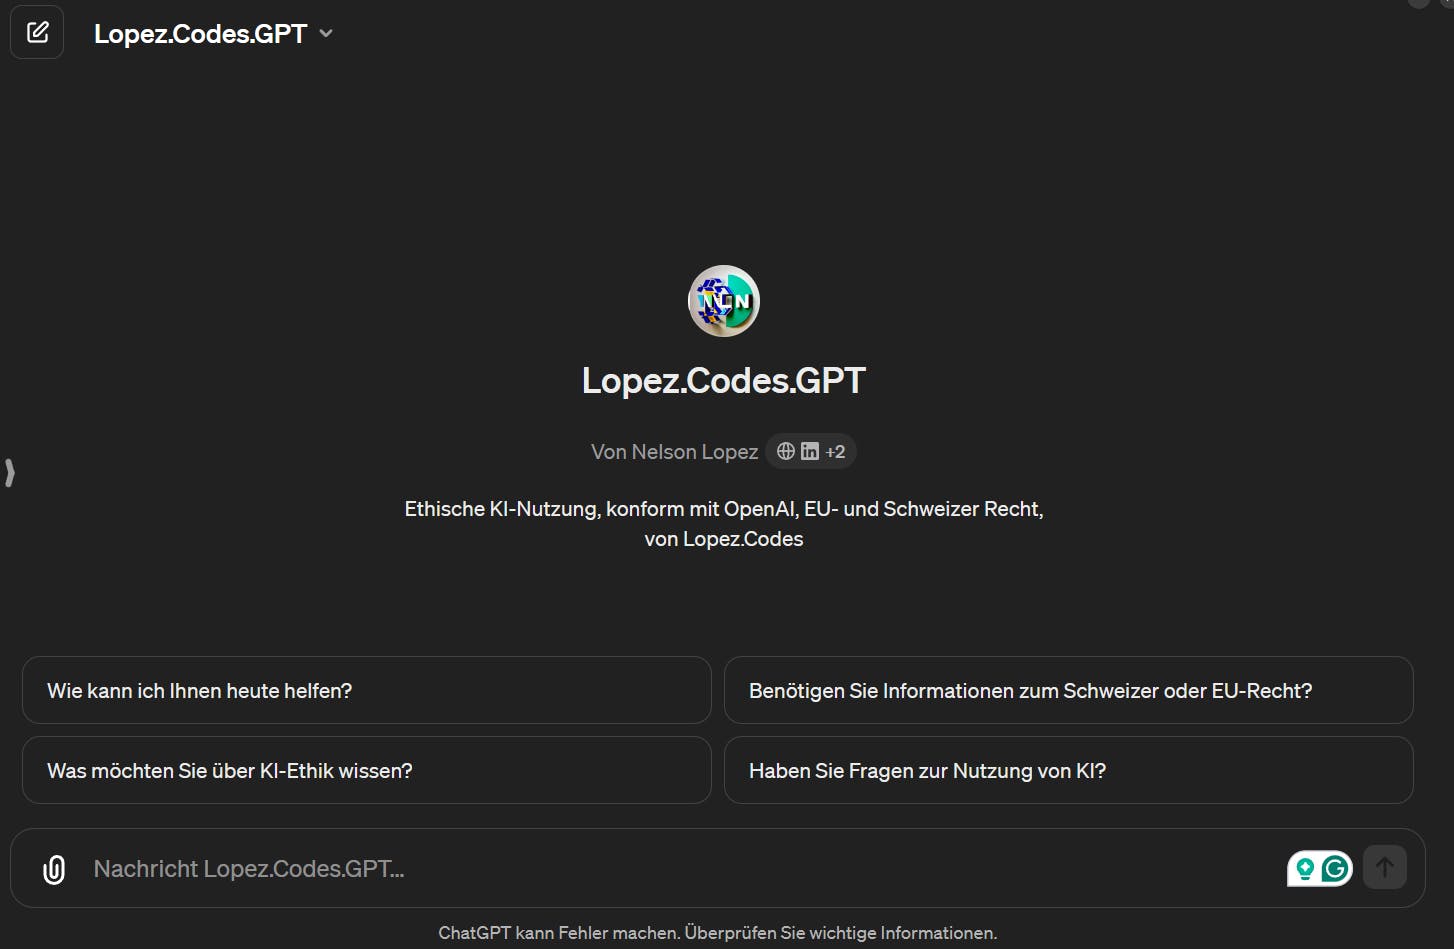 Lopez.Codes.GPT media 1